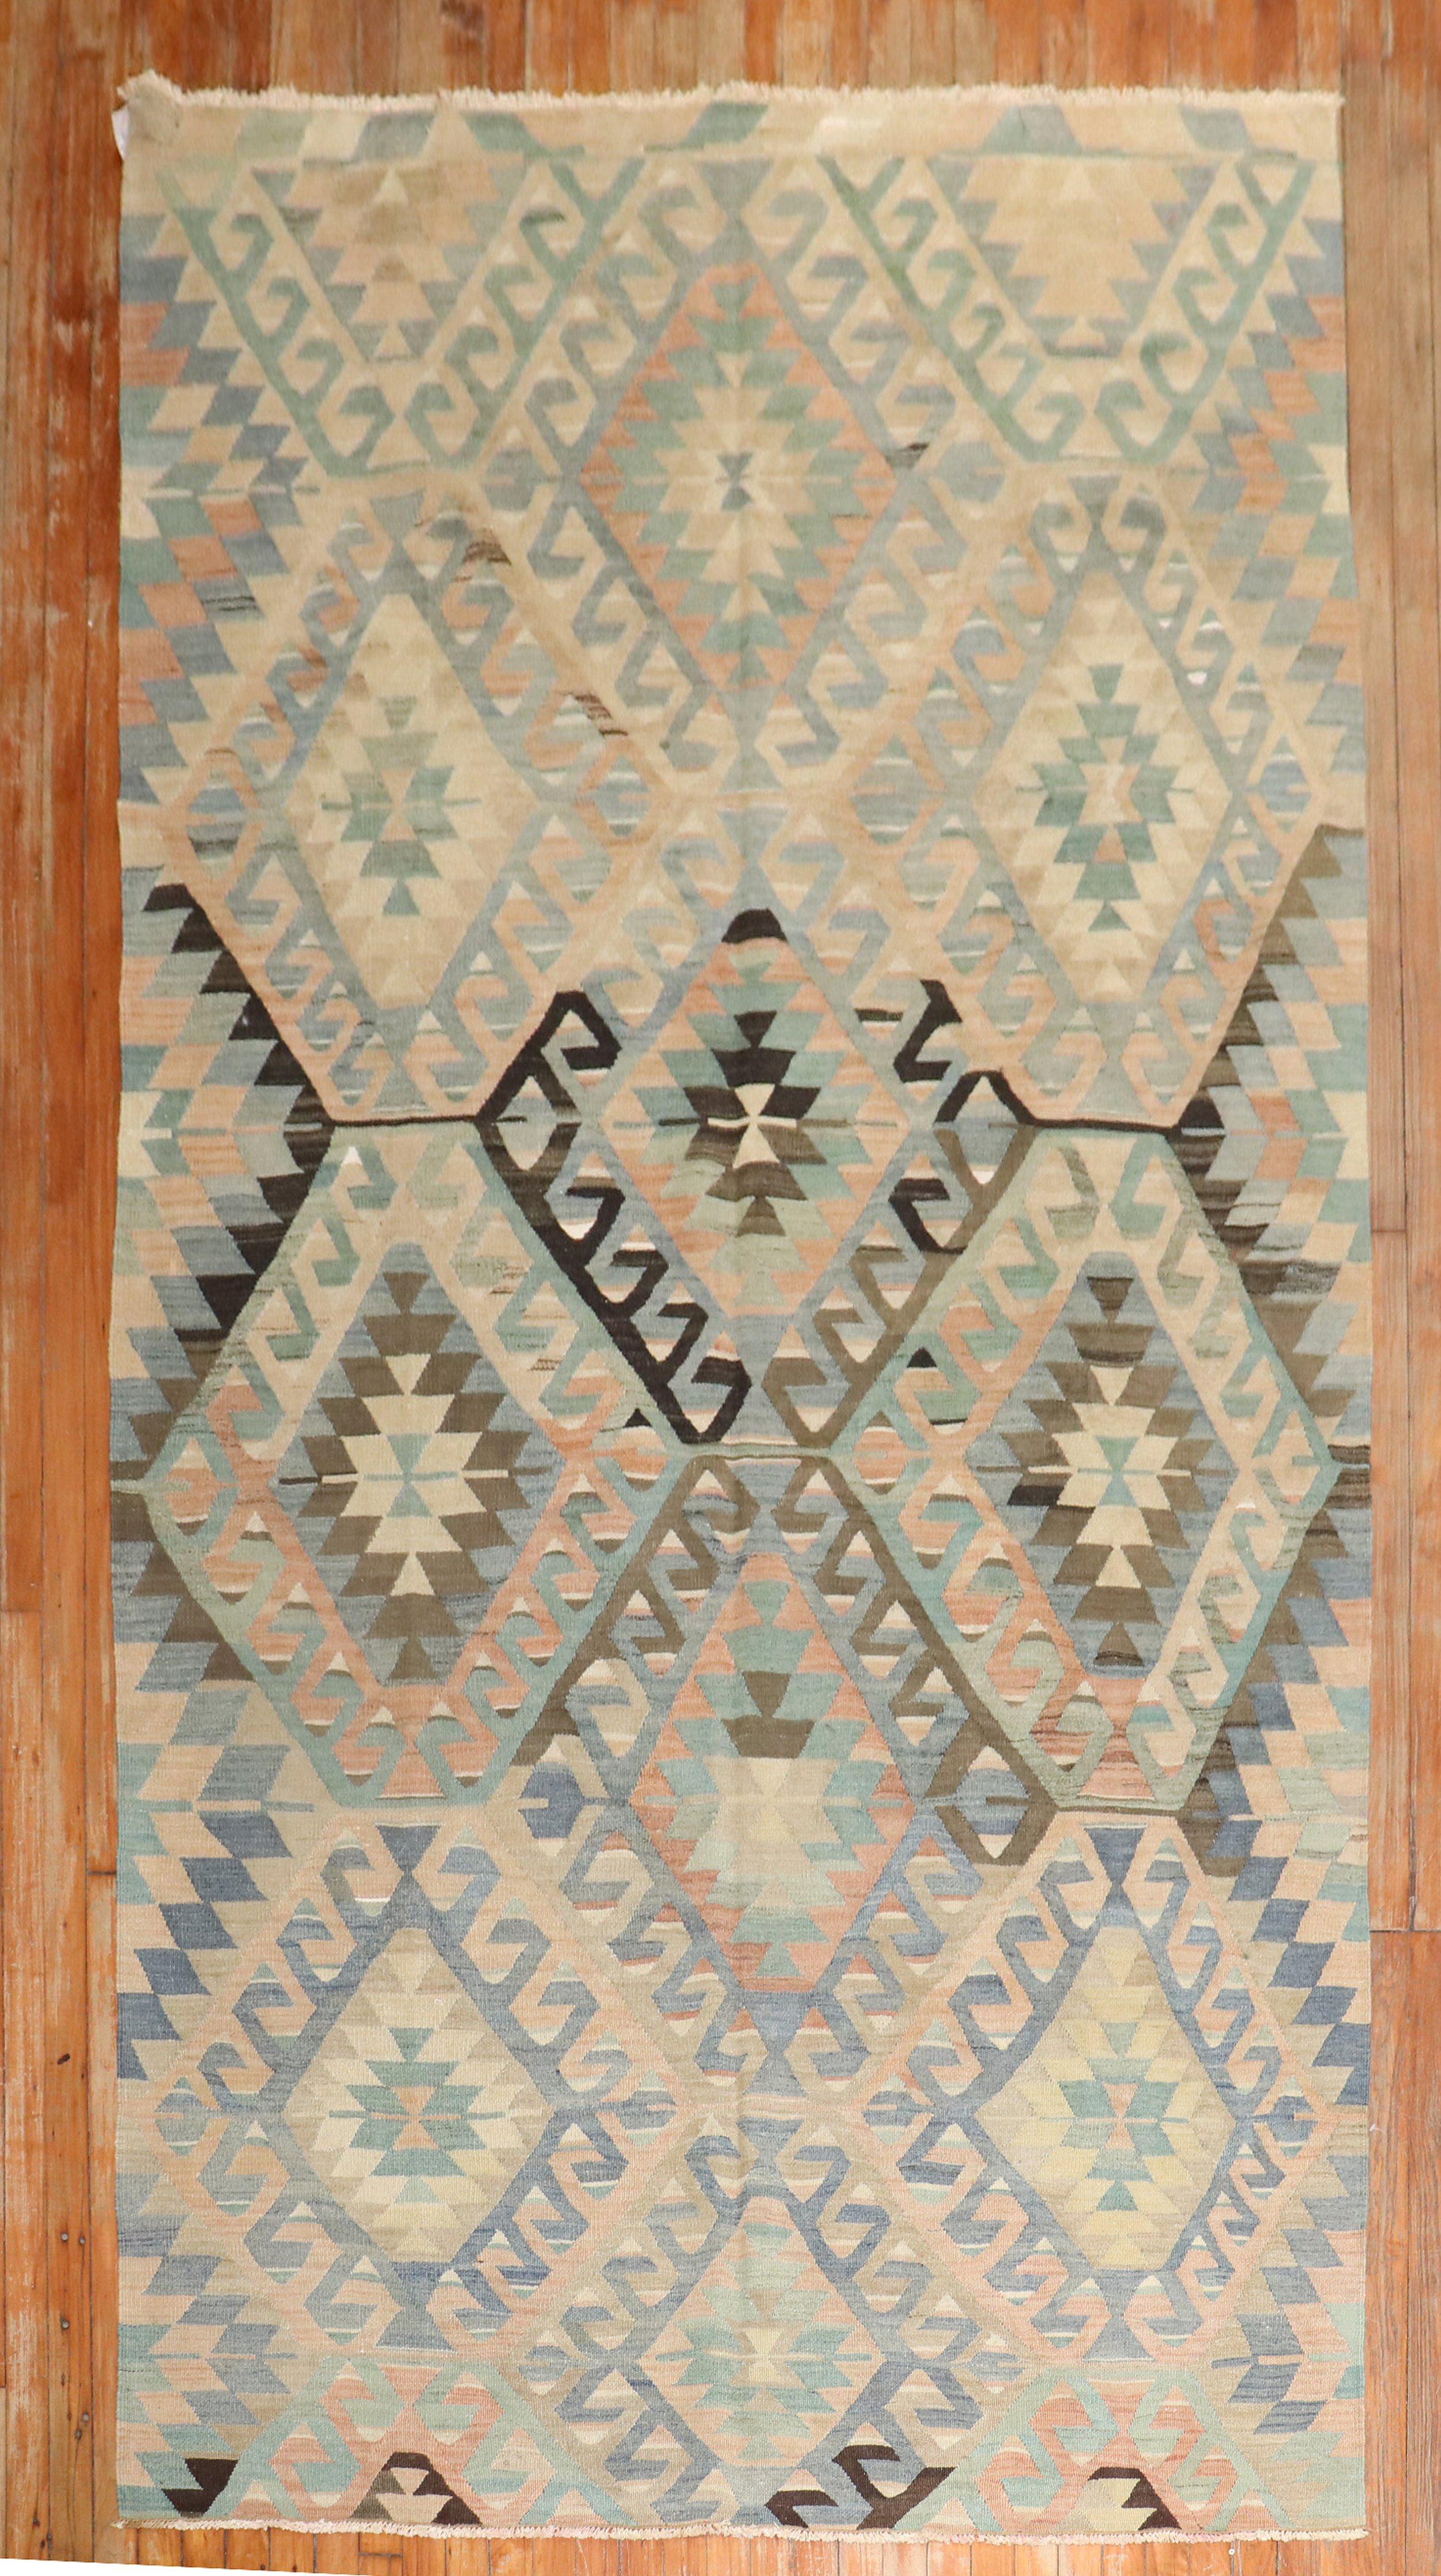 Geometric mid-20th century Turkish Kilim tribal flatweave rug

Measures: 5'6'' x 10'4'' circa mid-20th century.